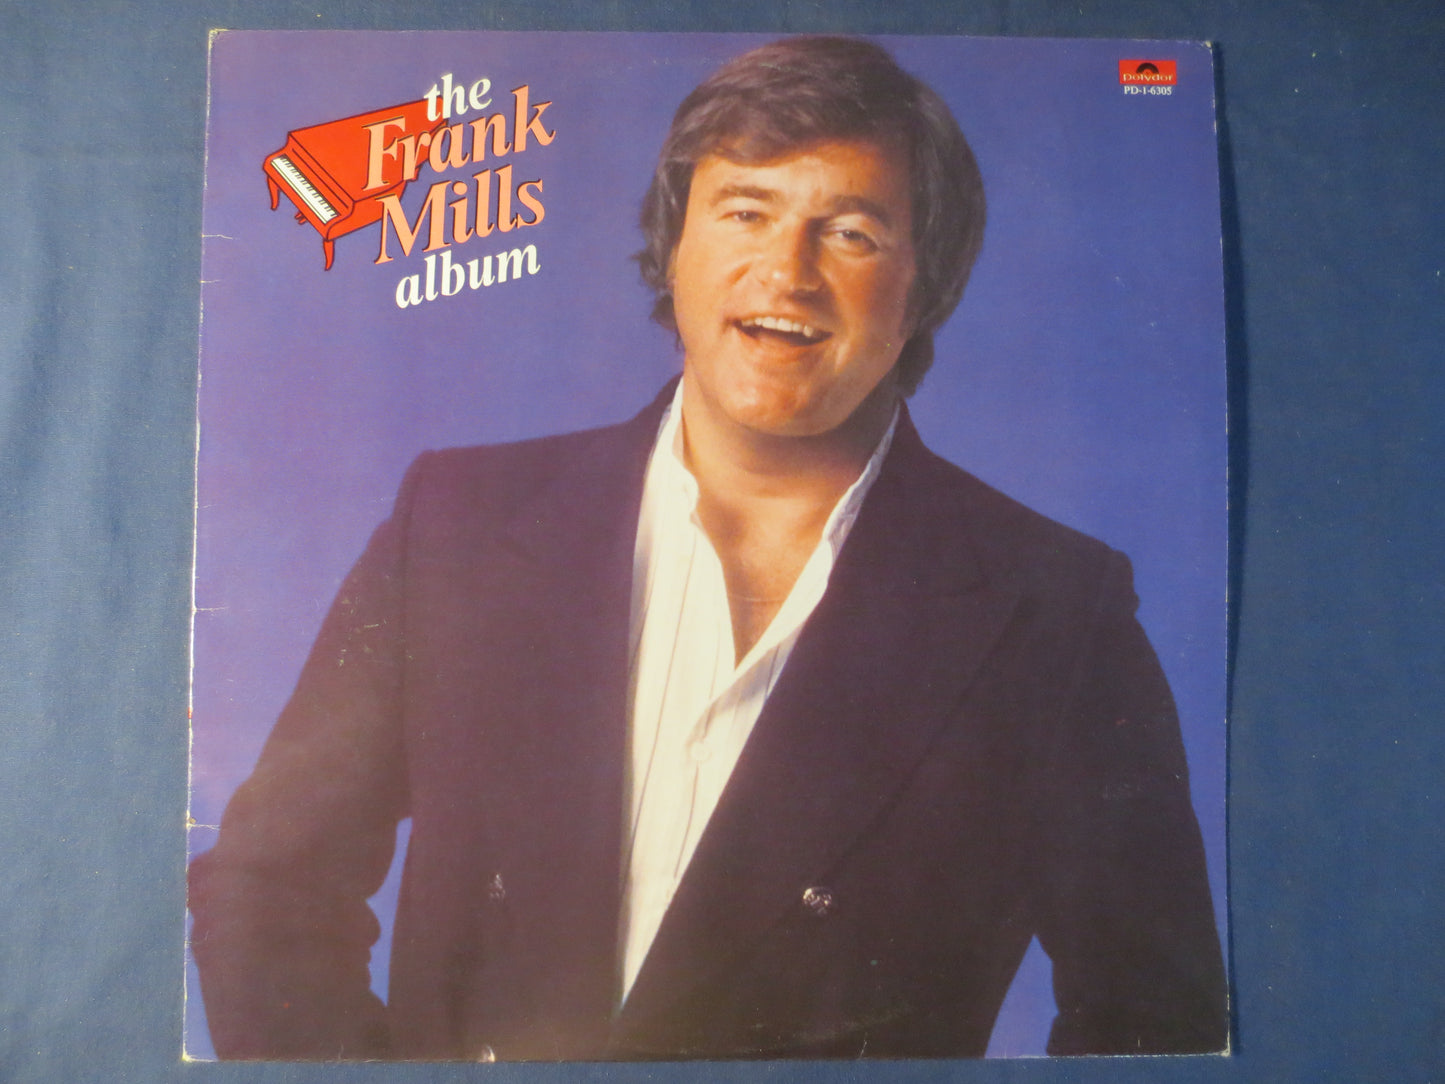 FRANK MILLS Record, The Frank Mills Album, Frank Mills Vinyl, Frank Mills Lp, Vintage Vinyl, Record Vinyl, Lp, 1980 Records